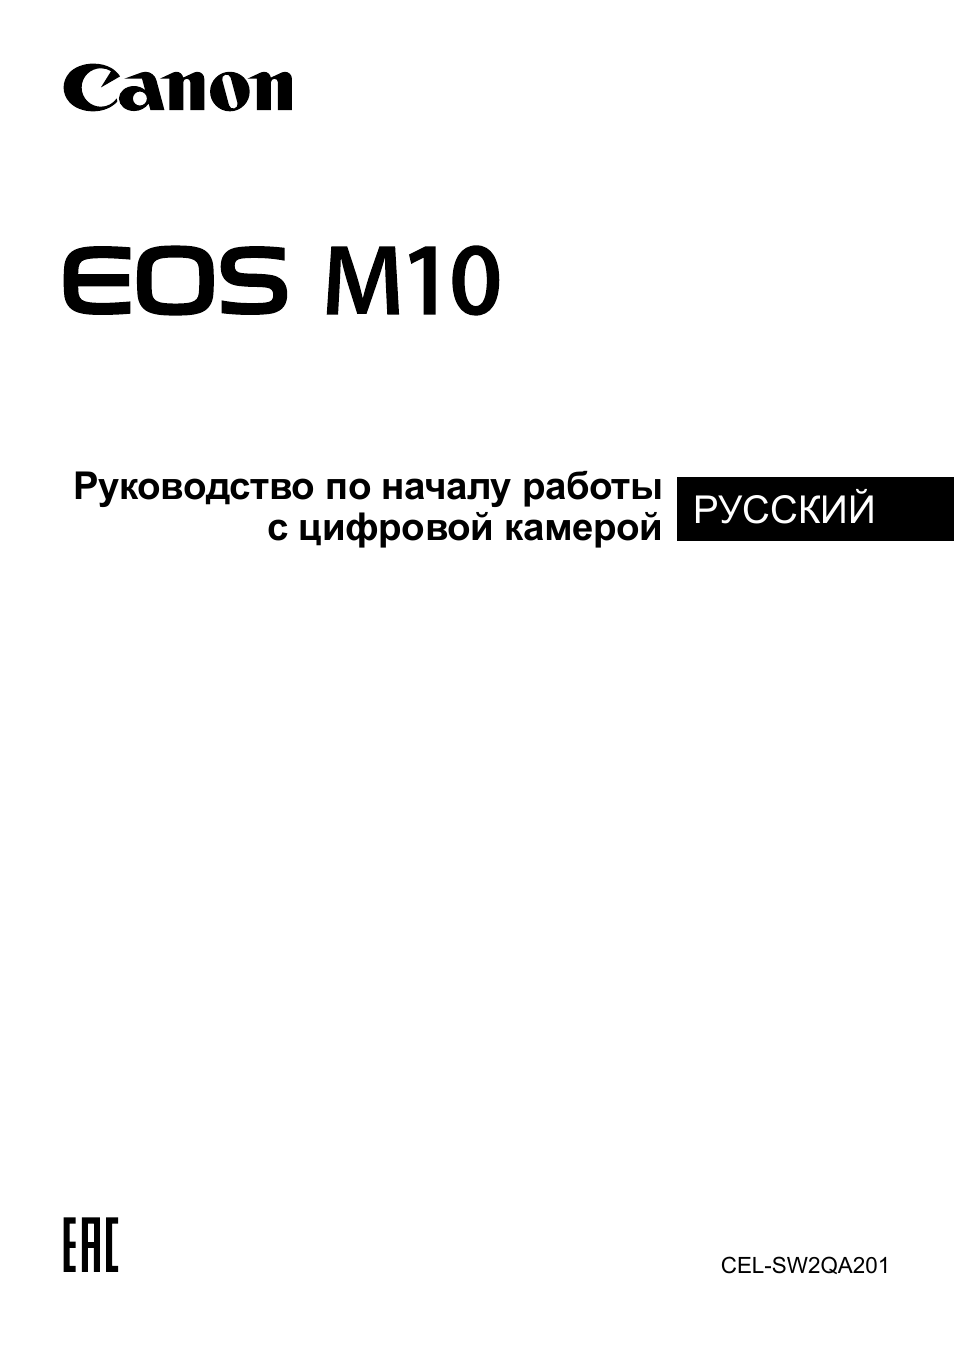 Инструкция по эксплуатации Canon EOS M10 | 21 cтраница